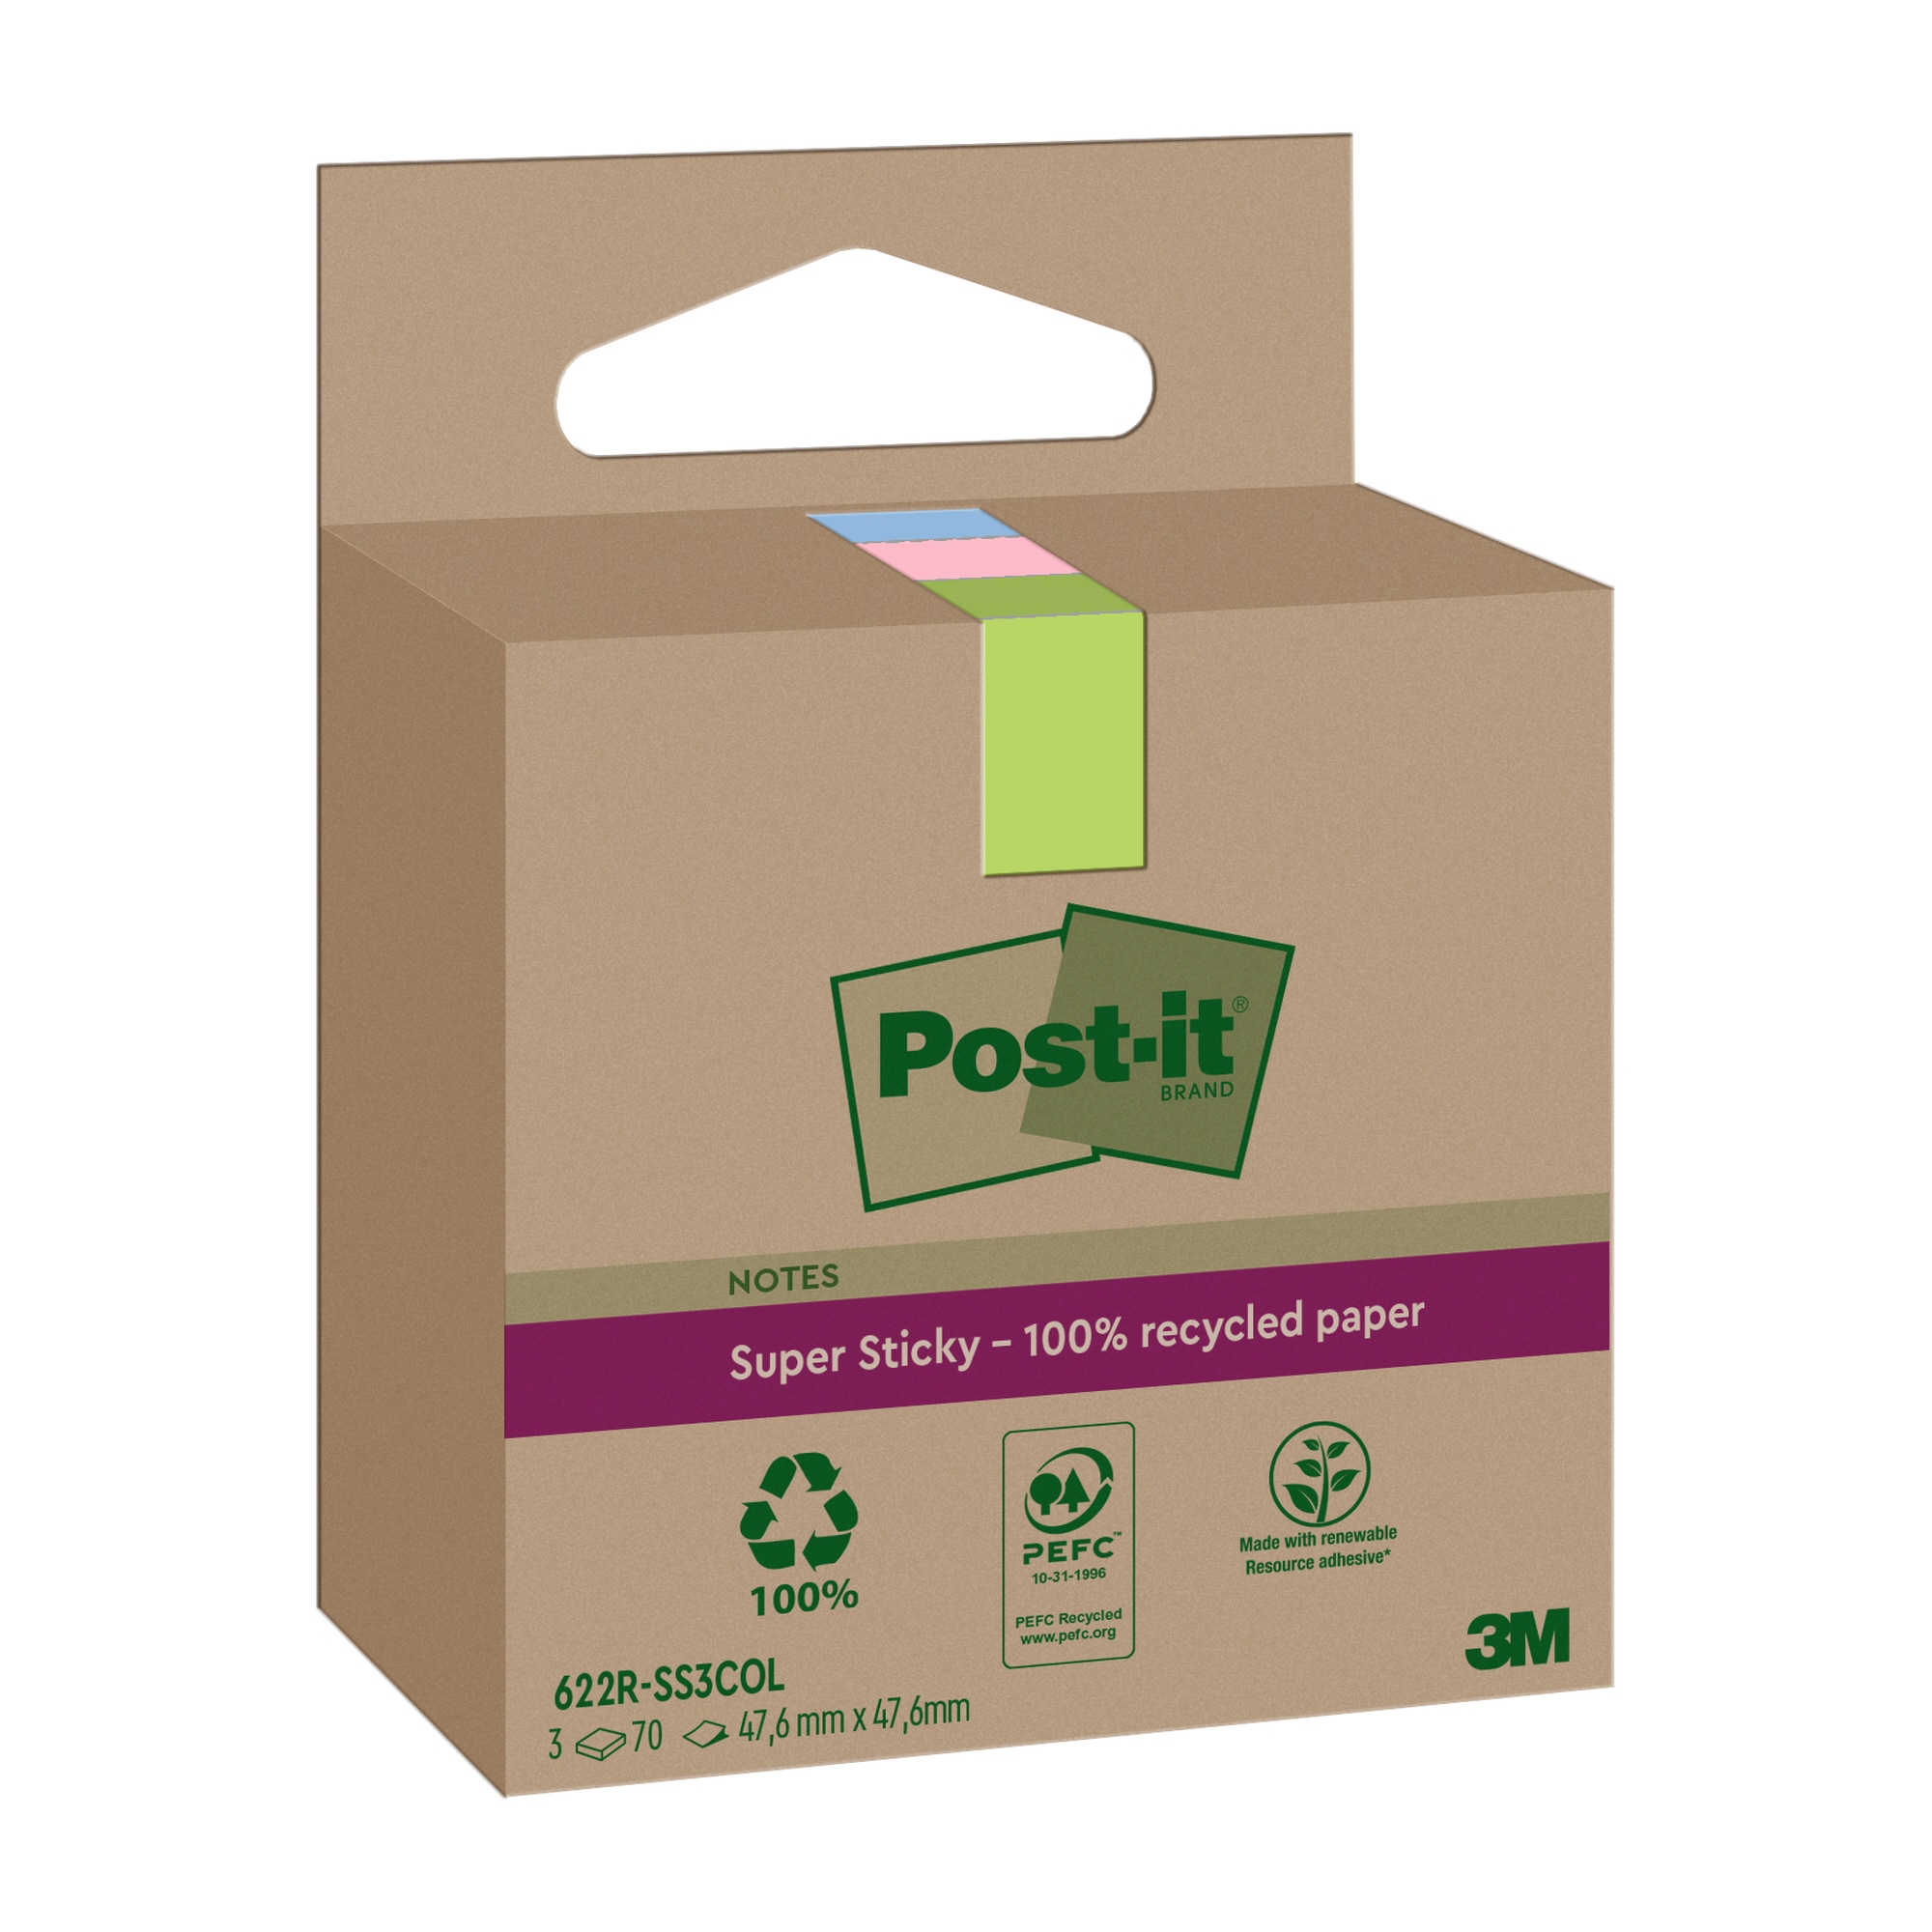 Post-it® Haftnotiz Recycling Notes 47,6x 47,6mmSuperSticky farbig 3 Block/Pack.